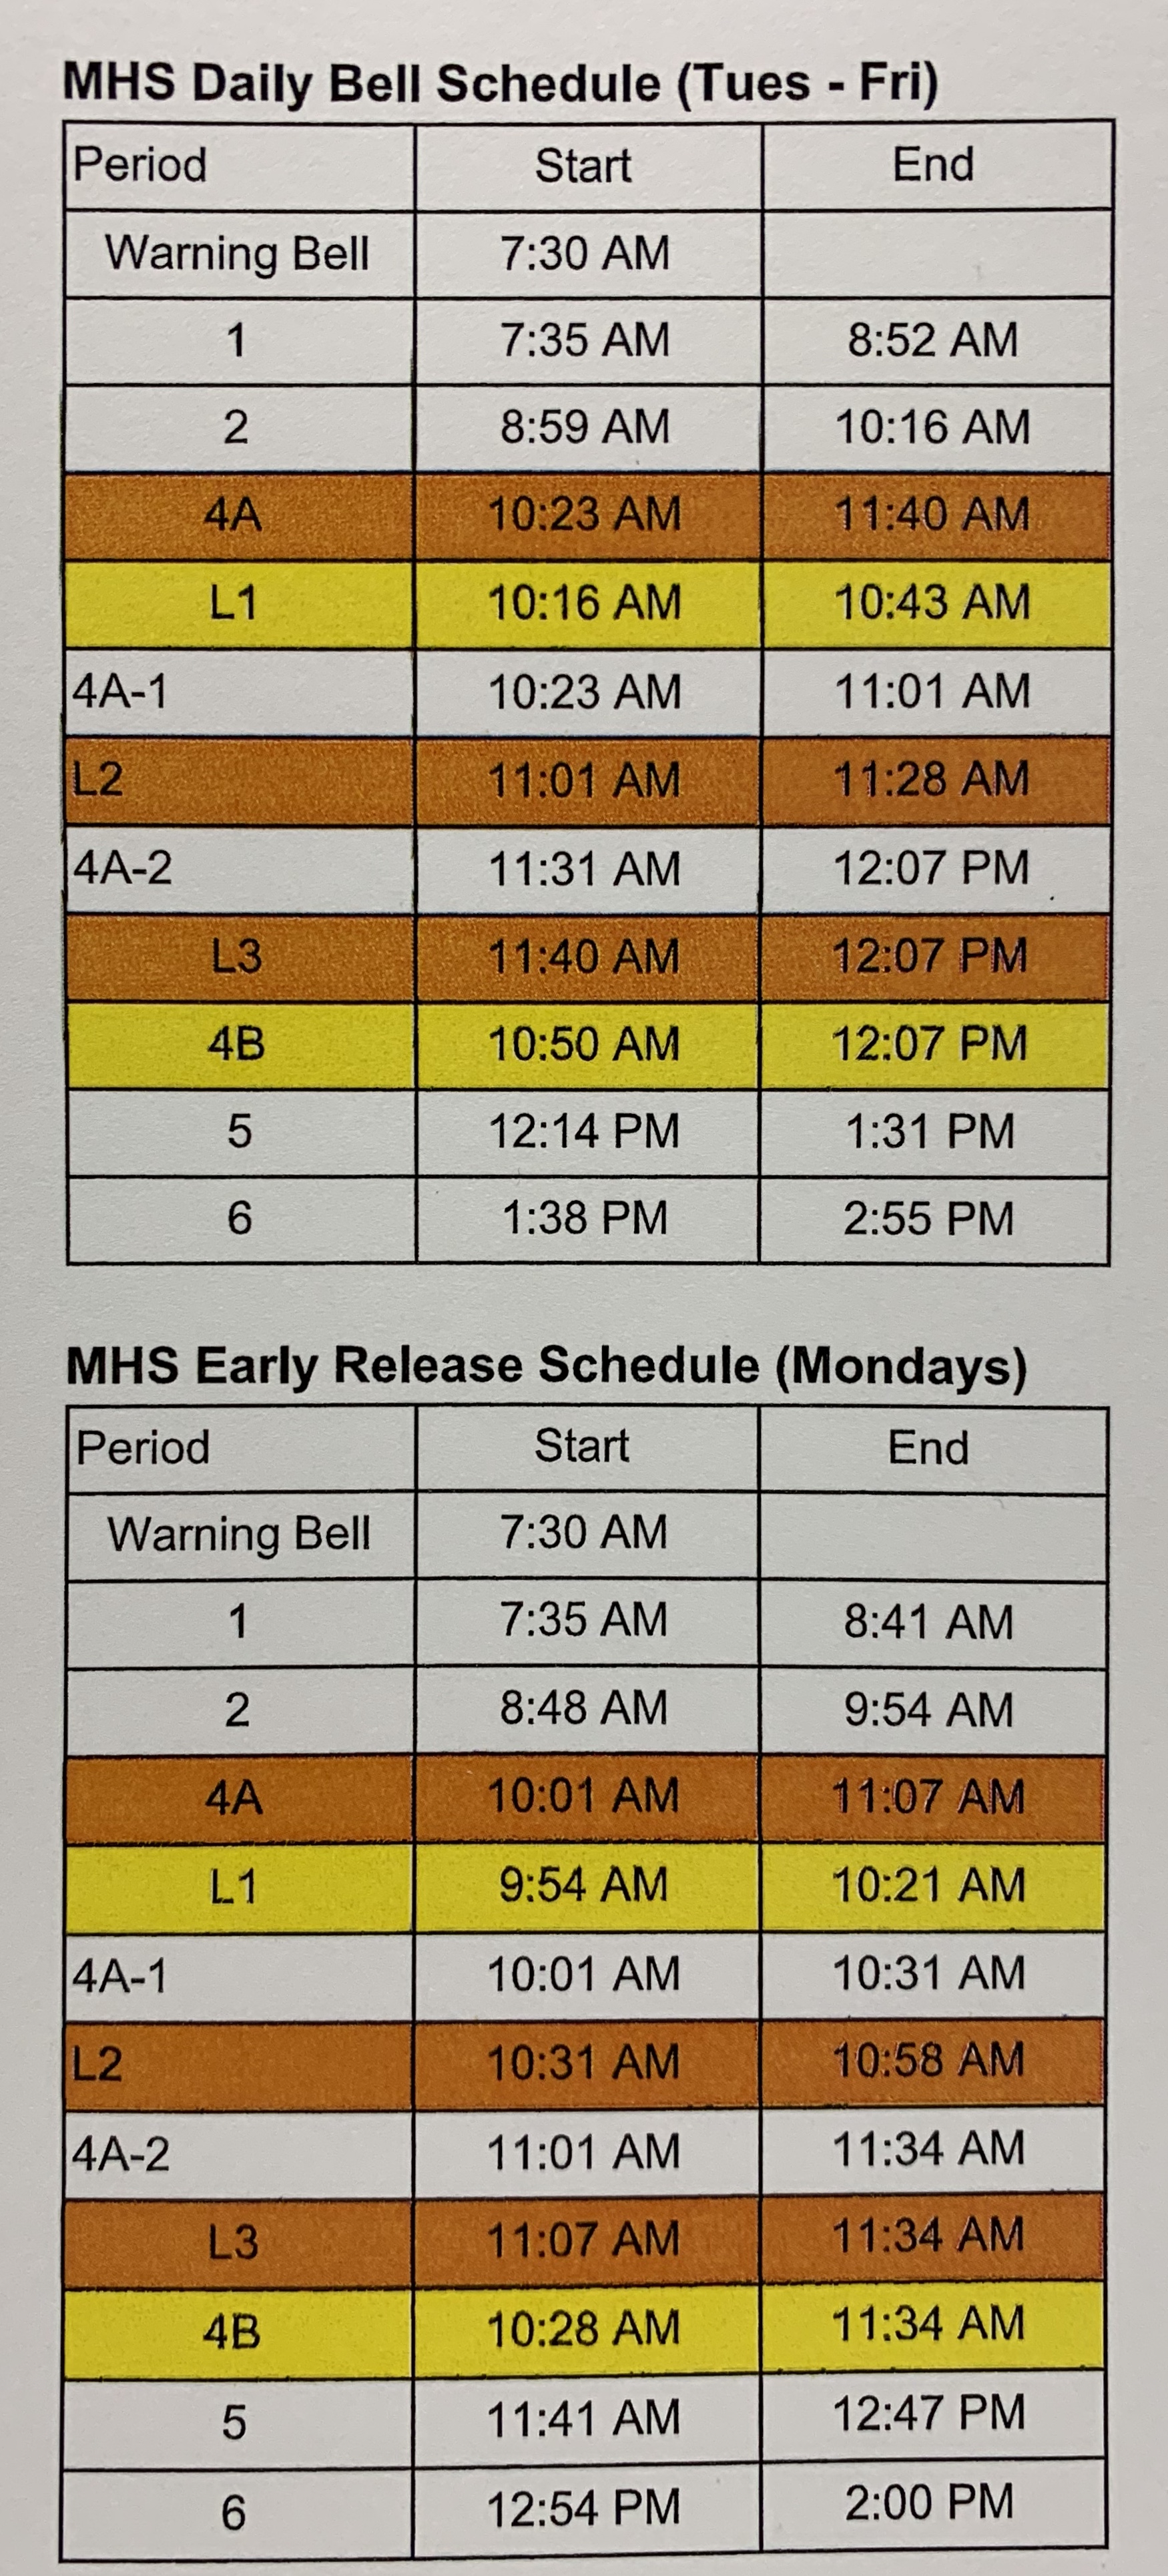 MHS Bell Schedule 2020 (updated 8-25-2020)